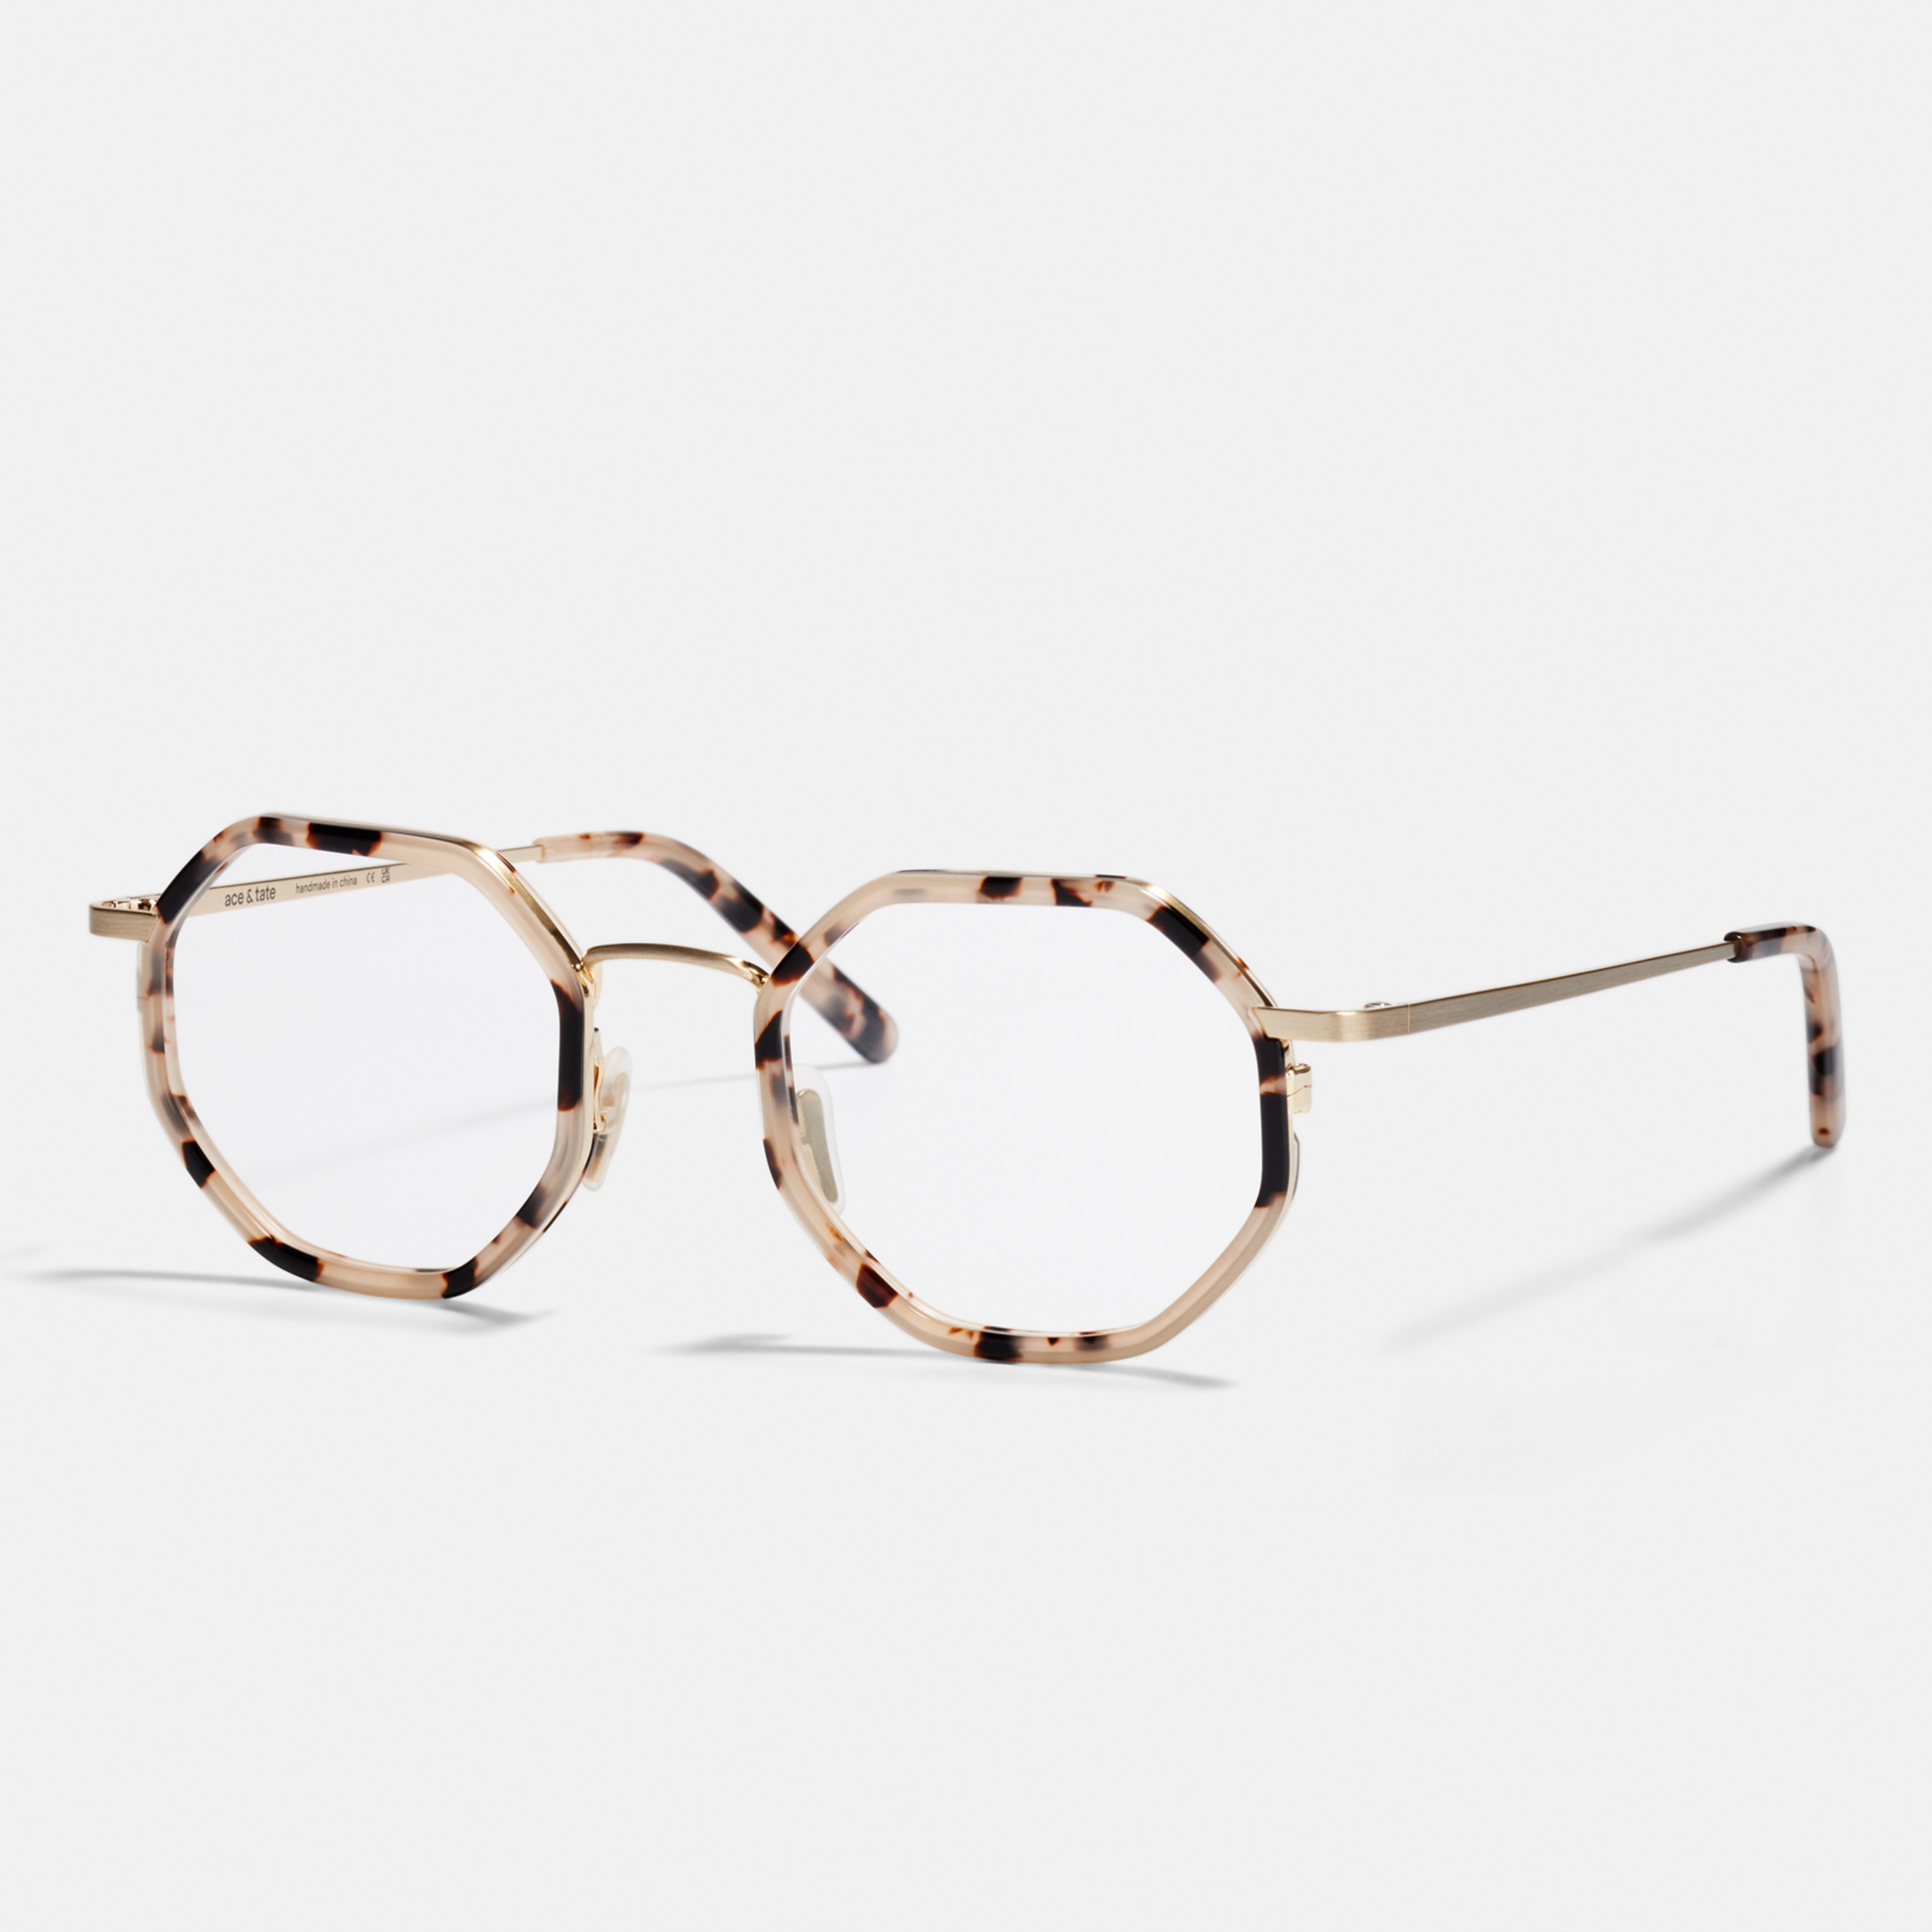 Ace & Tate Glasses | hexagonal Acetate in Beige, Brown